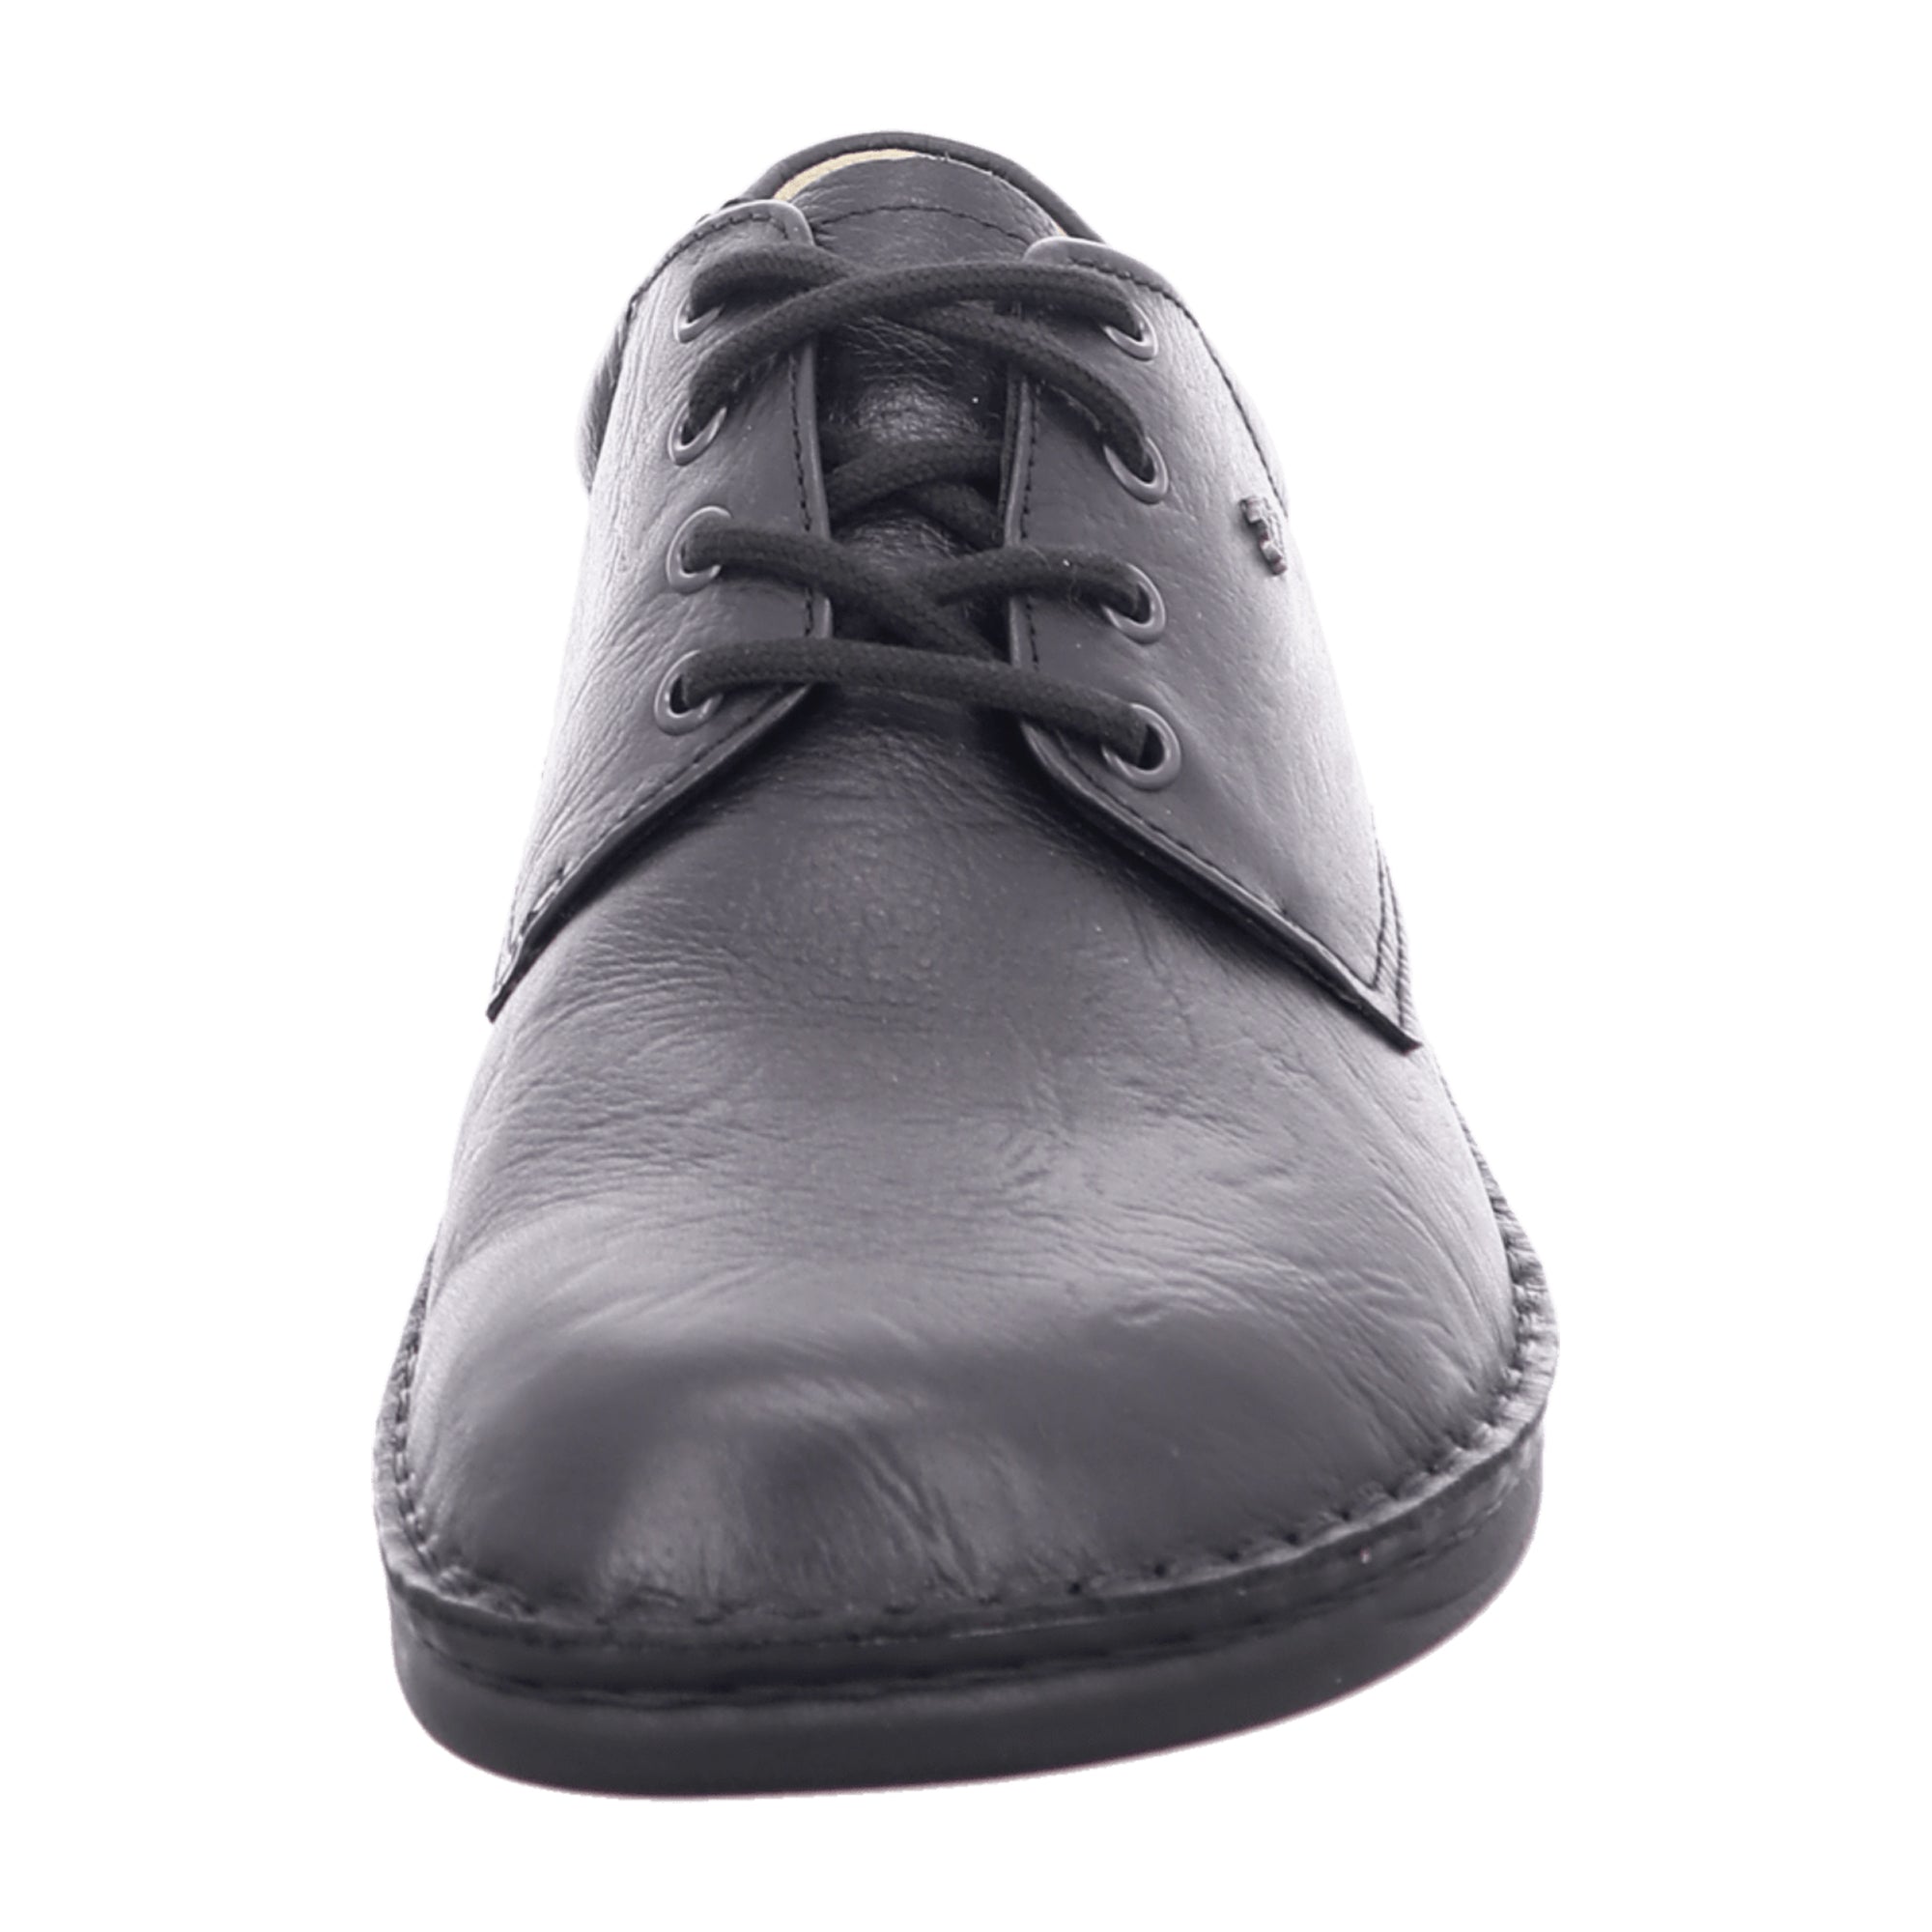 Finn Comfort Metz Men's Black Comfort Shoes - Optimal Stability & Shock Absorption